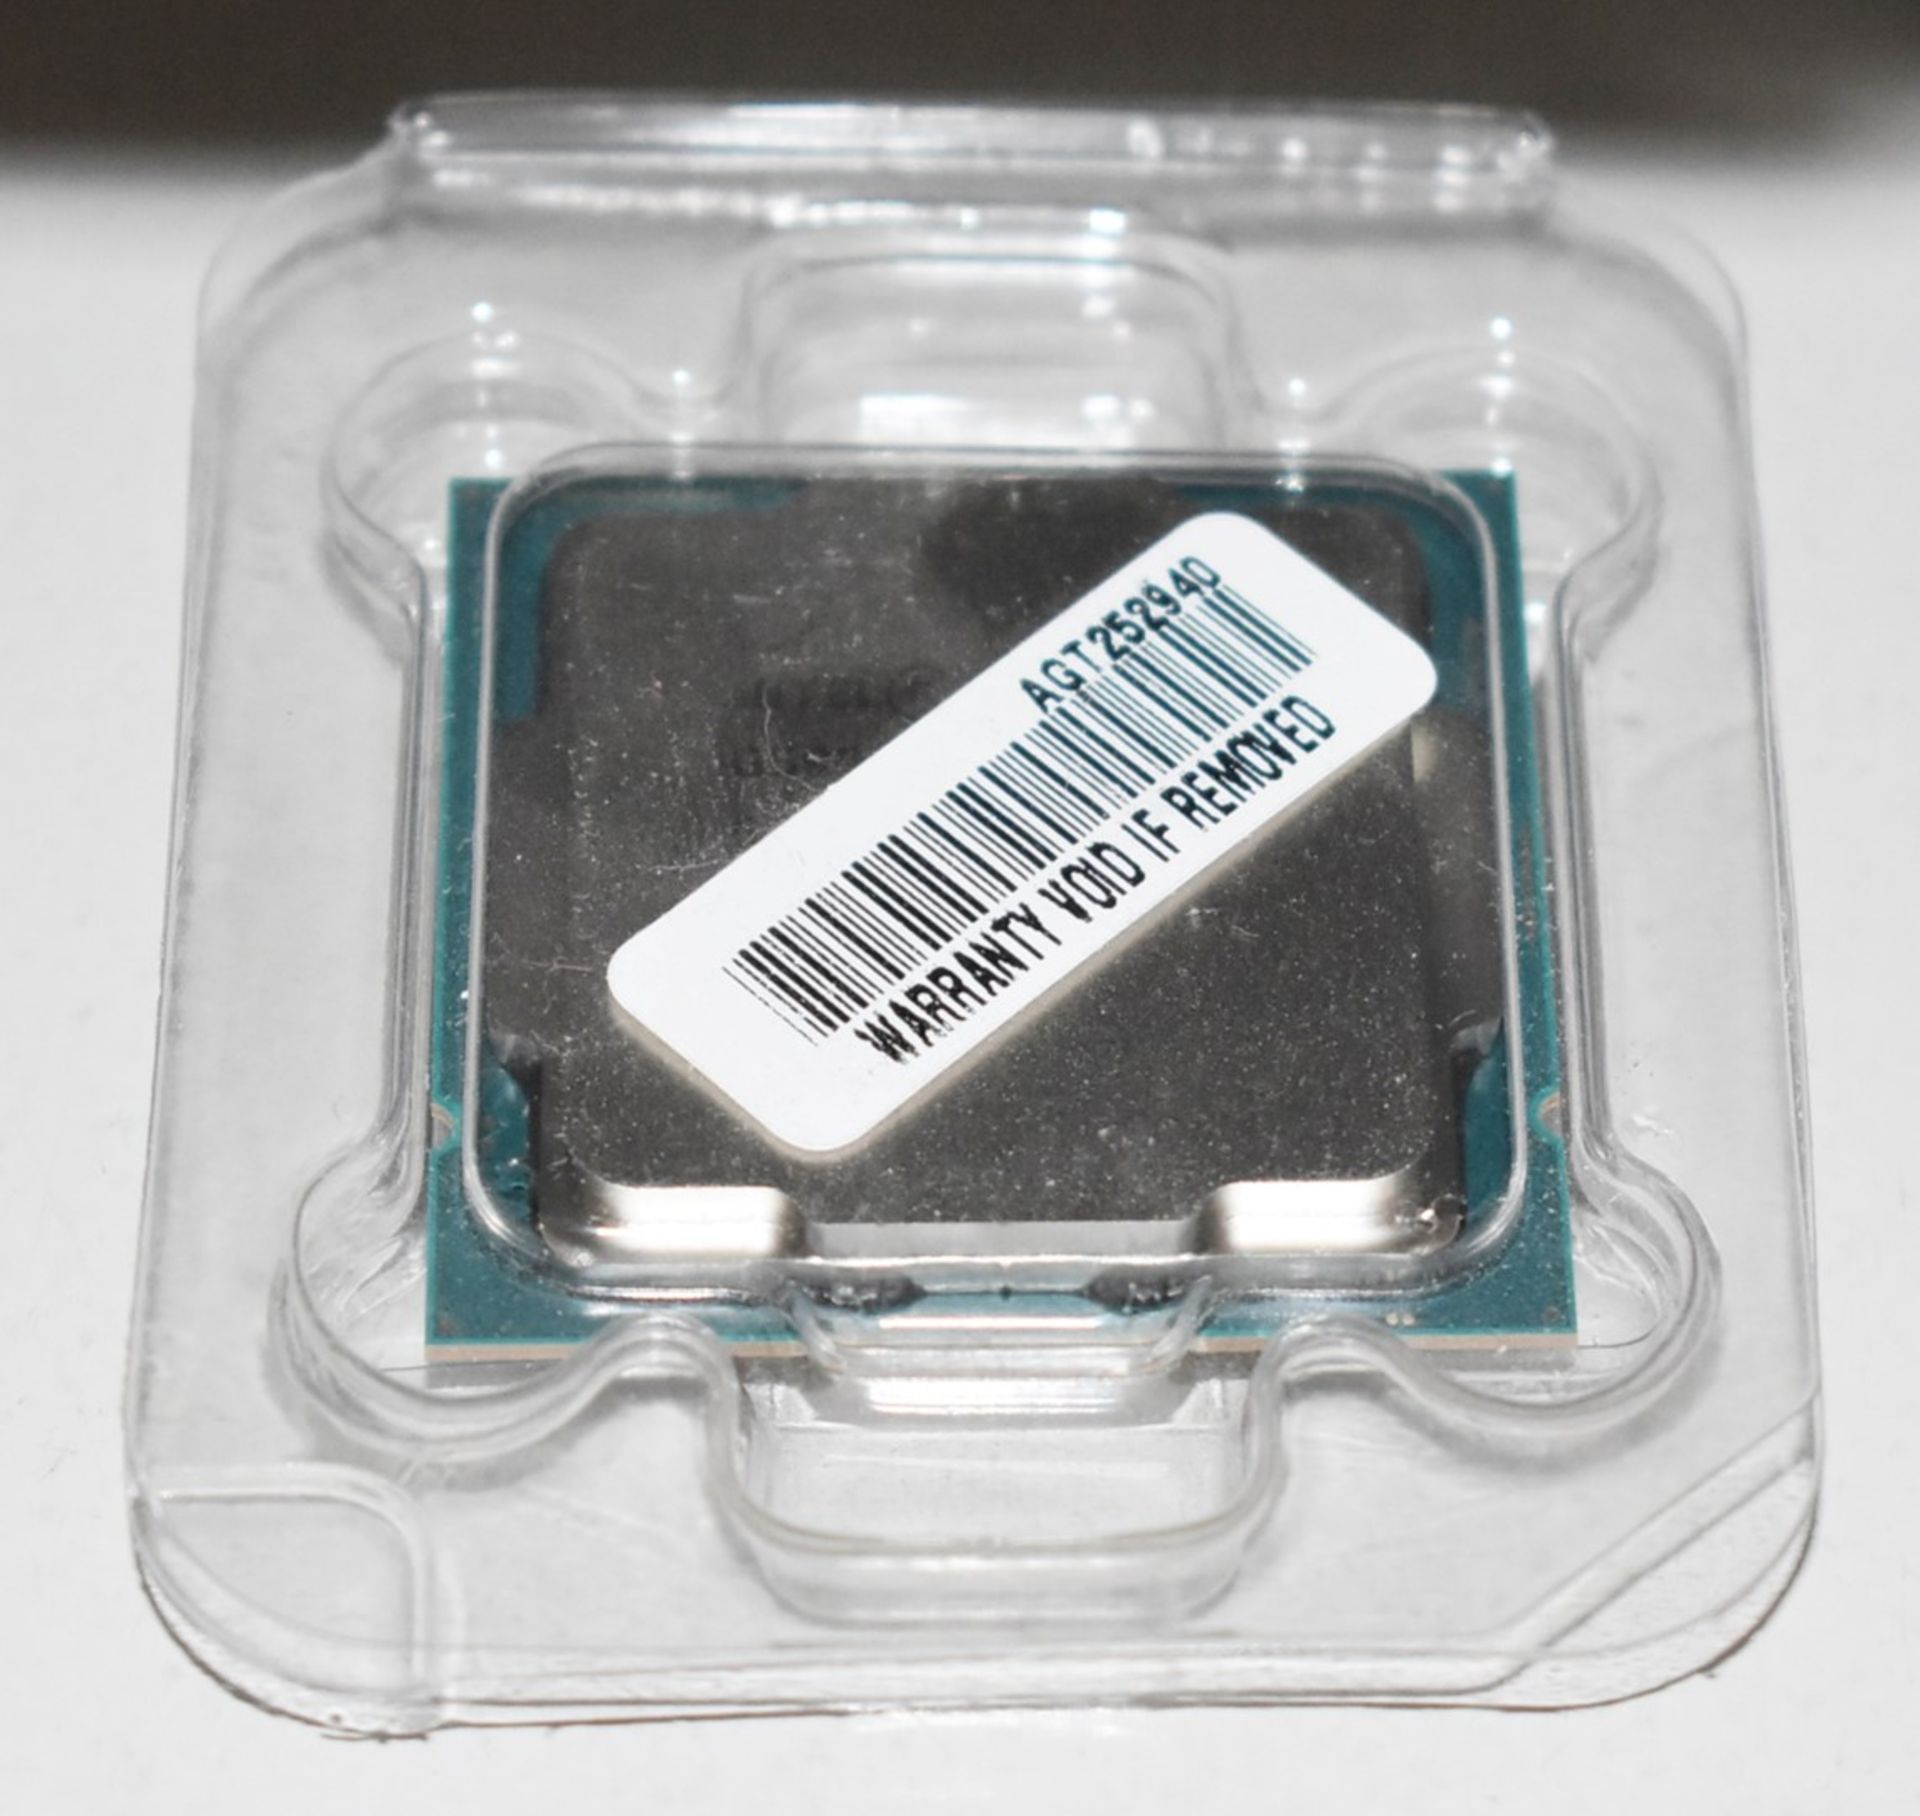 1 x Intel Celeron G5905 10th Gen 3.5Ghz LGA1200 Dual Core Processor - New and Unused - Image 4 of 4